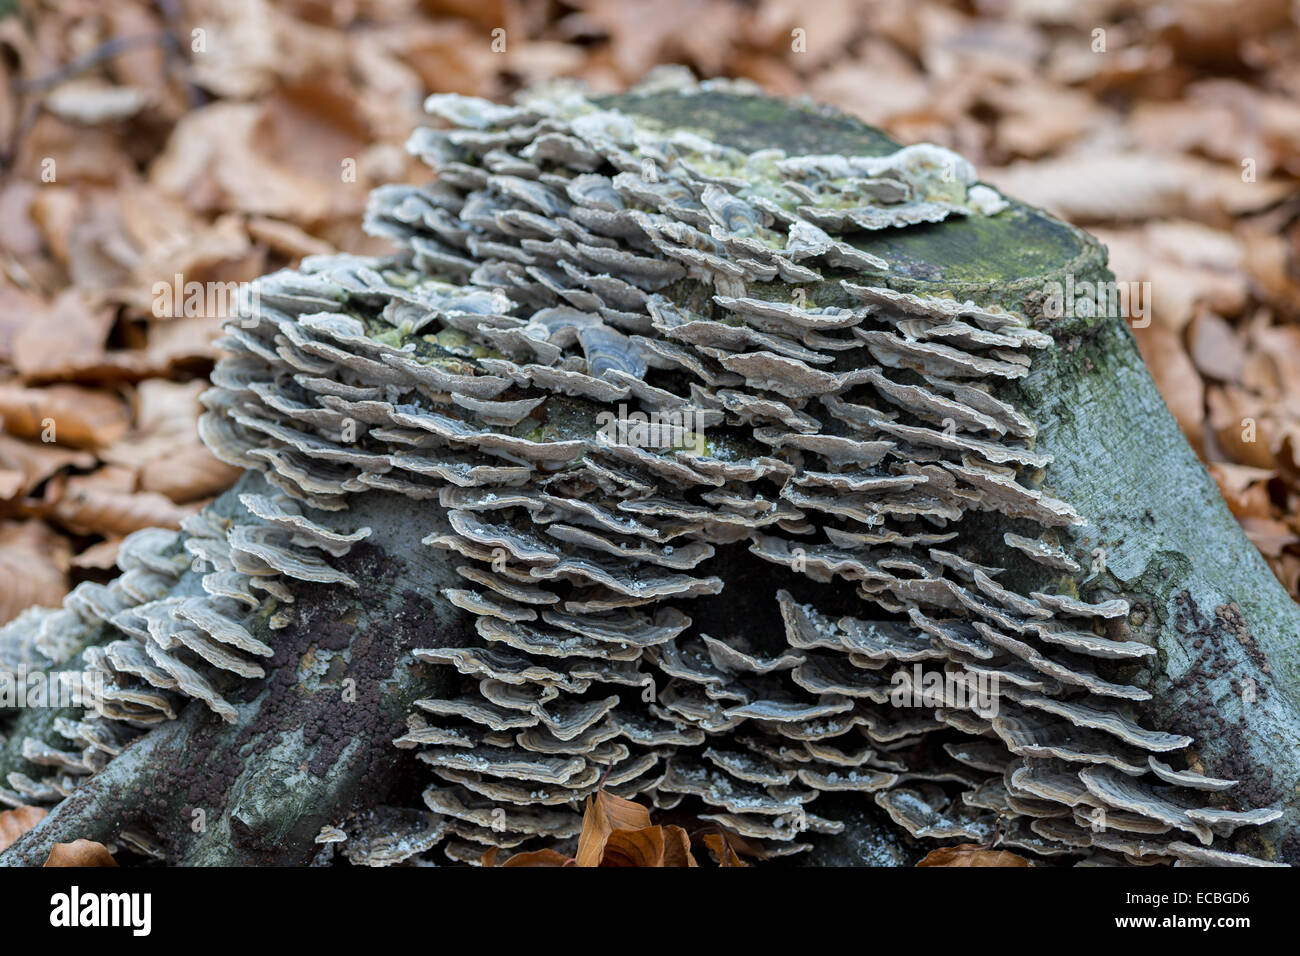 Abundant fungus growing on the old tree stump Stock Photo